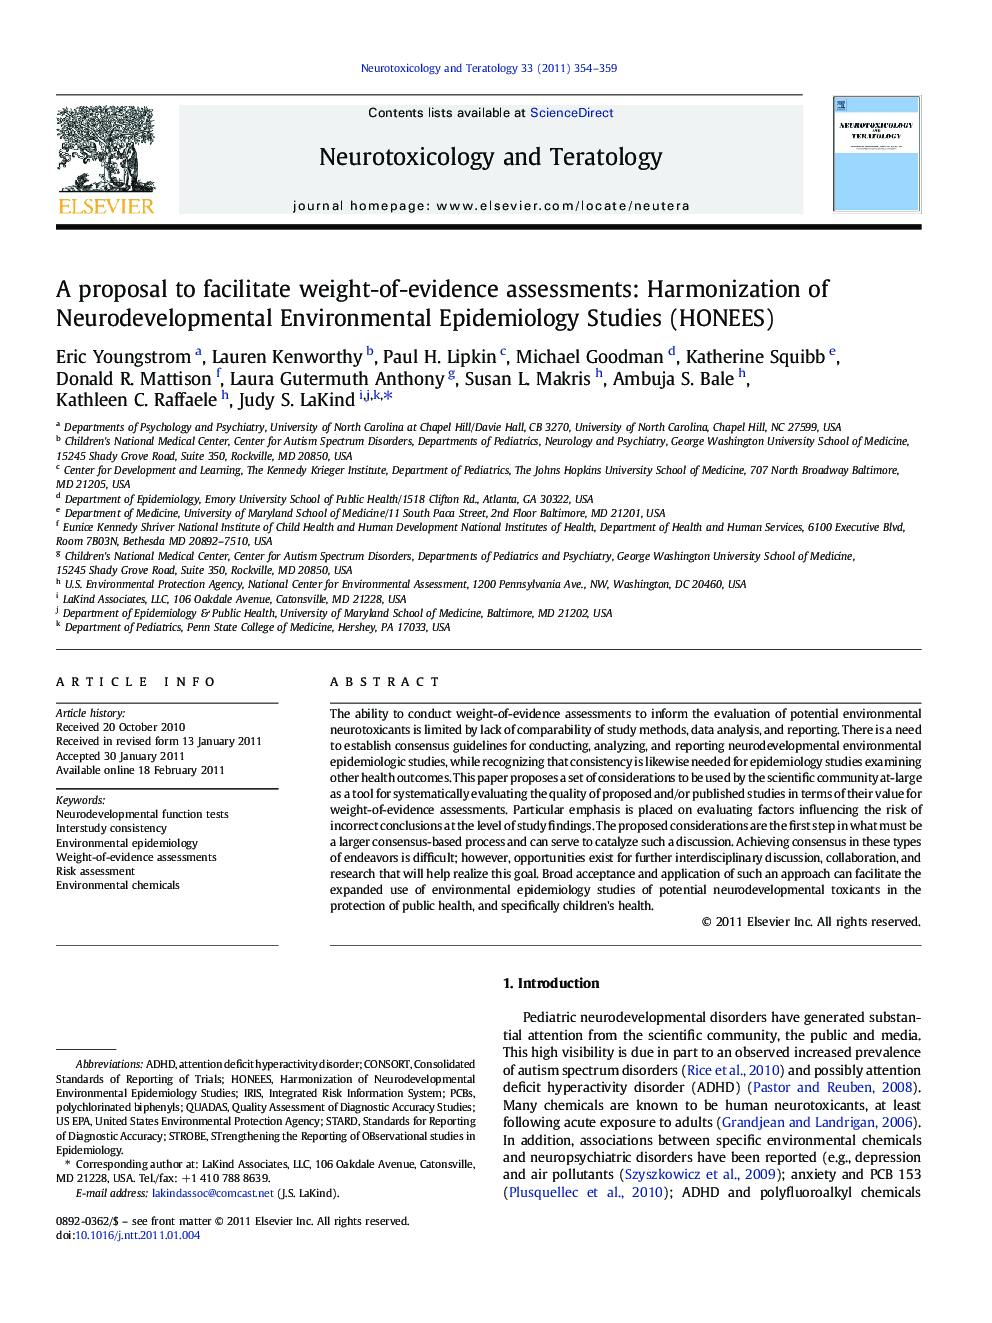 A proposal to facilitate weight-of-evidence assessments: Harmonization of Neurodevelopmental Environmental Epidemiology Studies (HONEES)